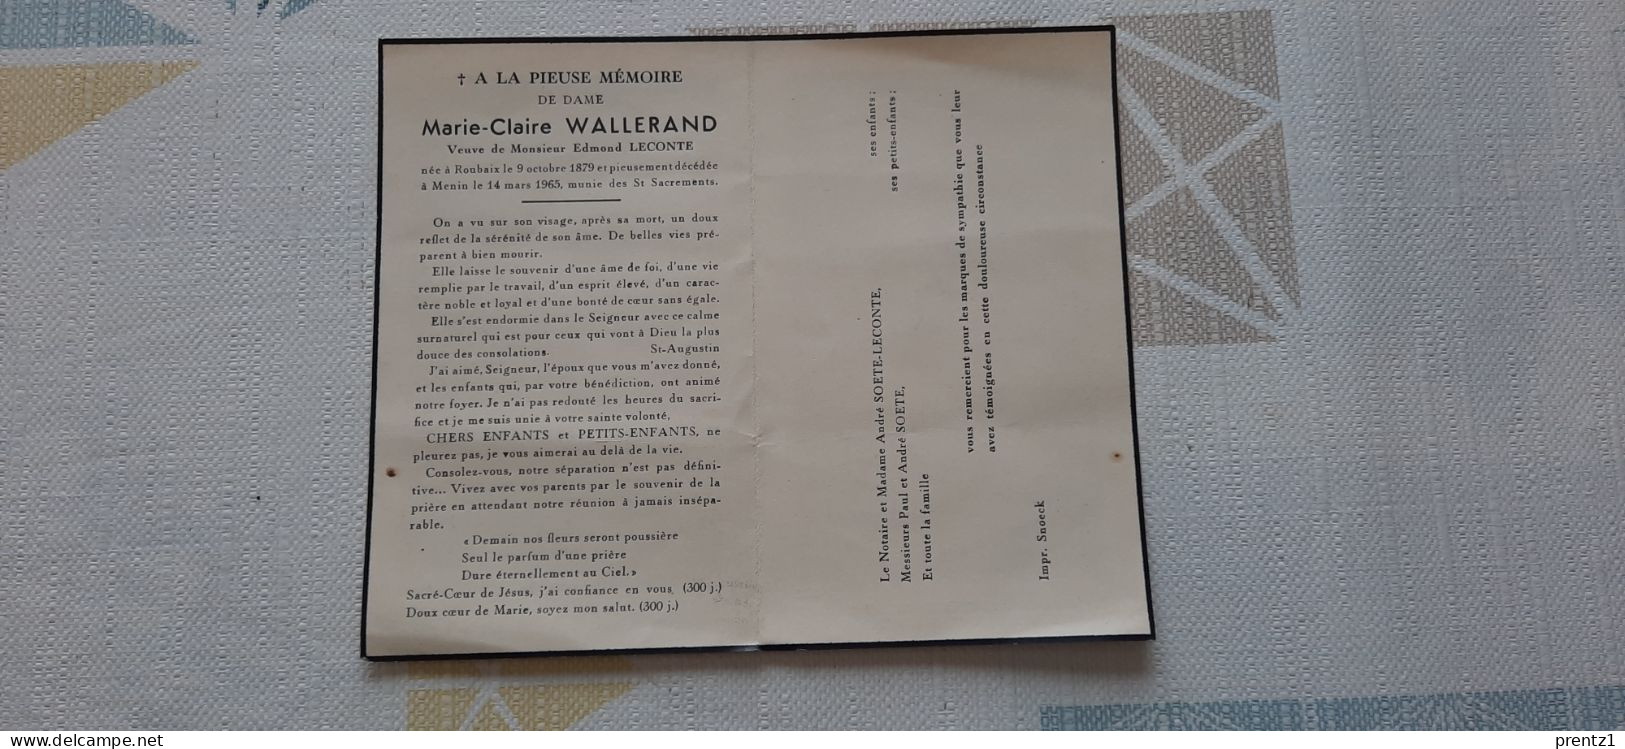 Marie Wallerand Geb. Roubaix 9/10/1879- Getr. Edmond Leconte - Gest. Menen 14/03/1965 - Devotion Images